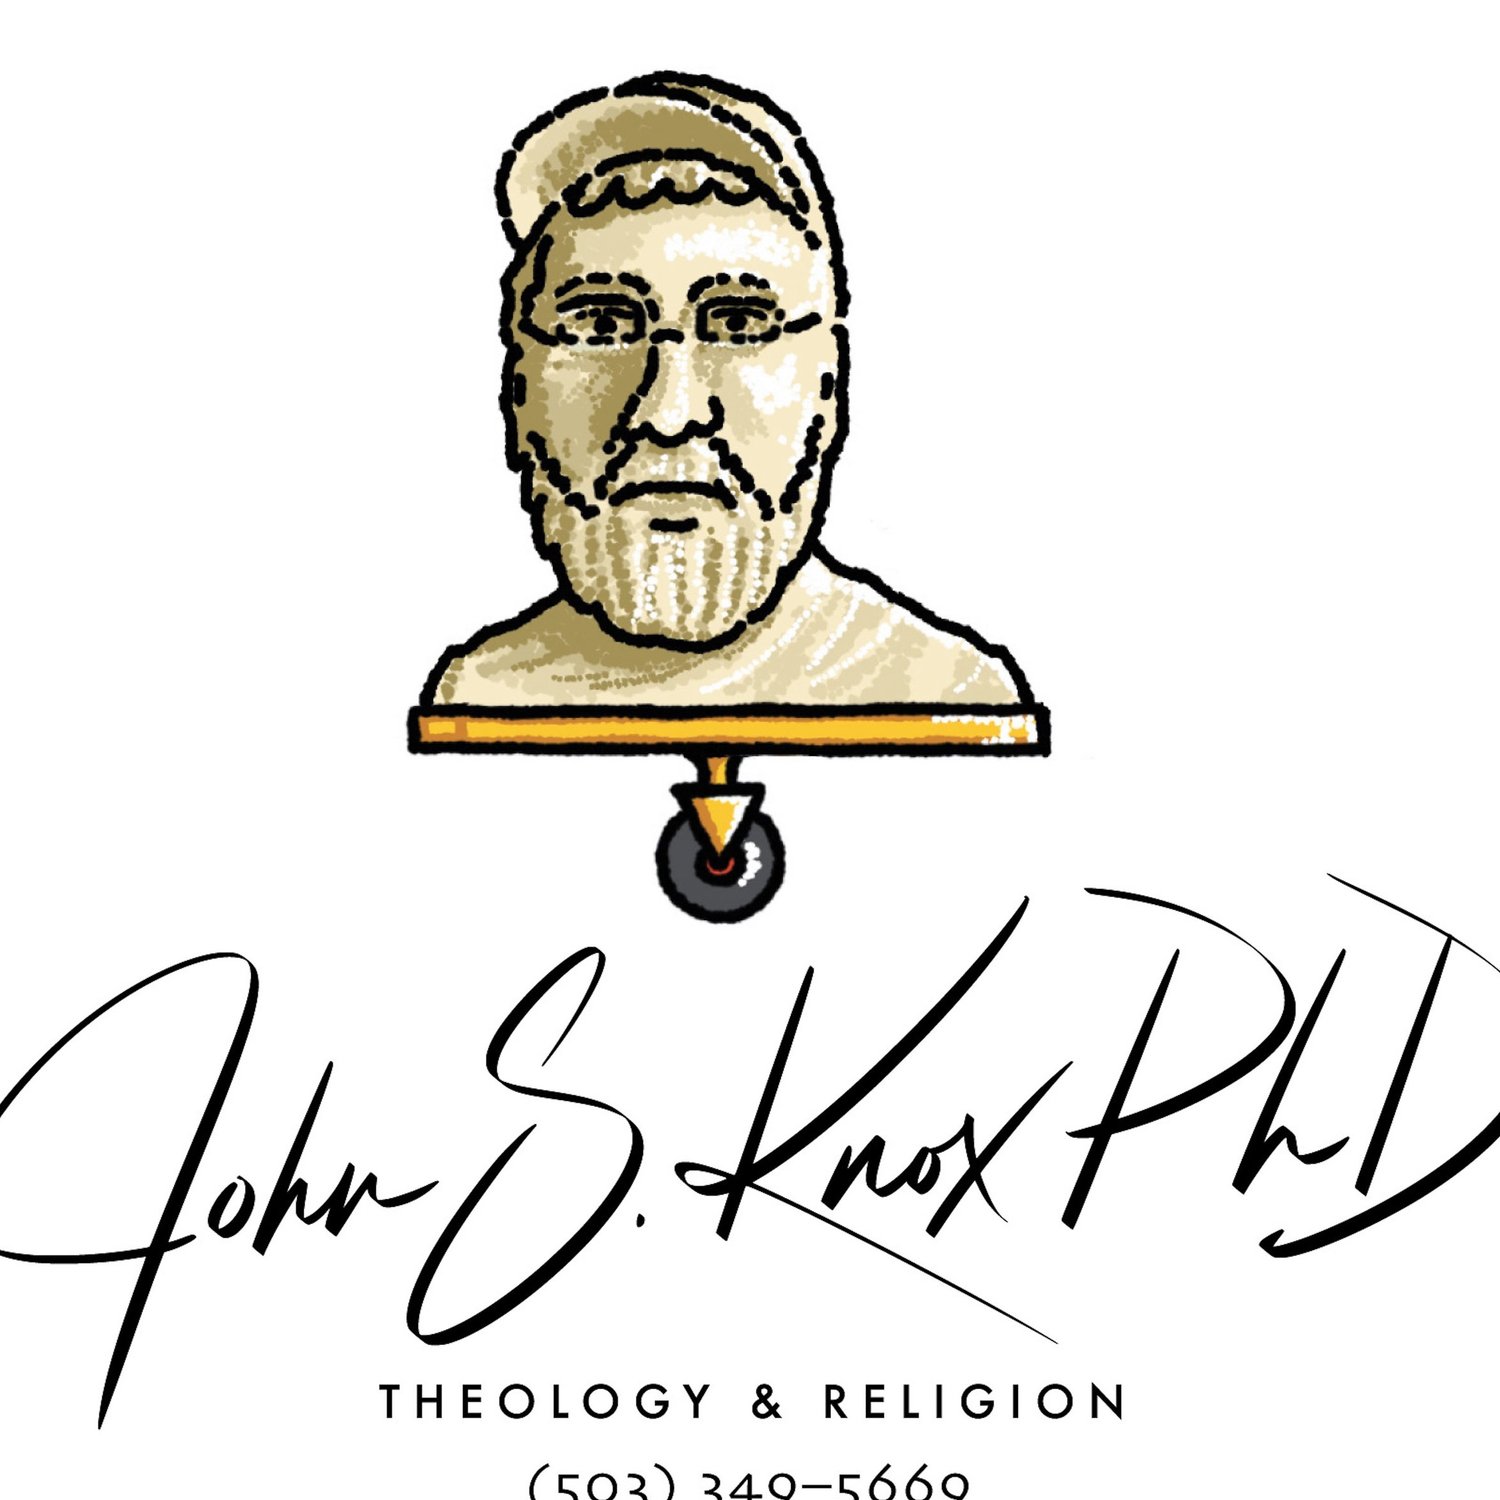 John S. Knox